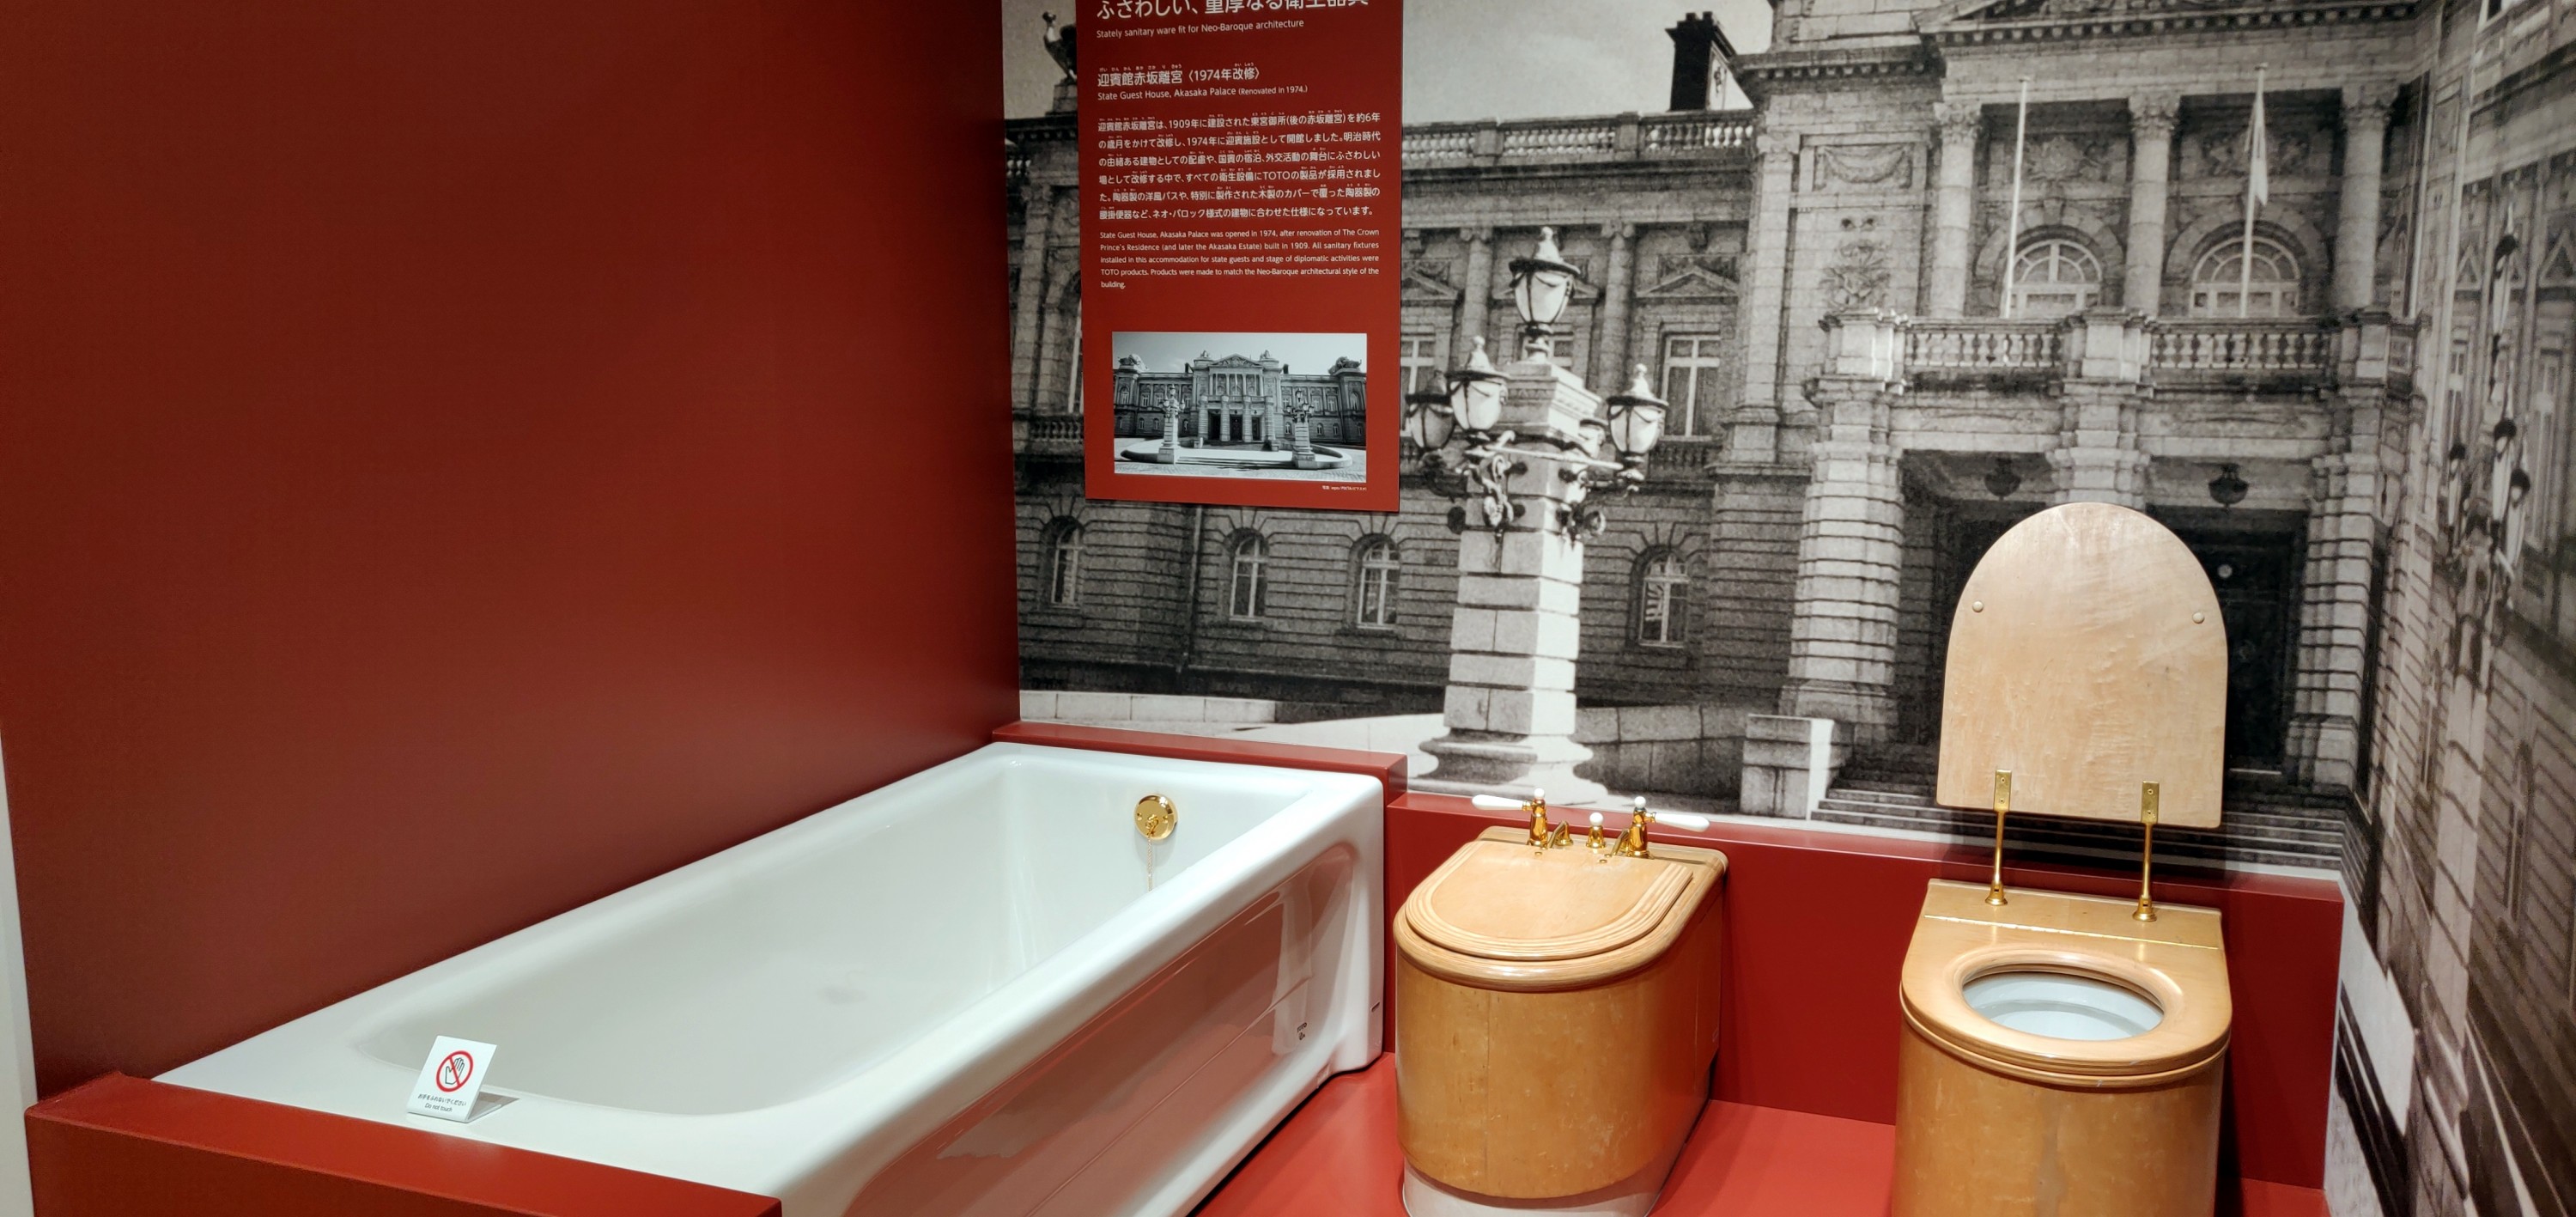 Toto toilet museum : Kitakyushu Japan | Visions of Travel